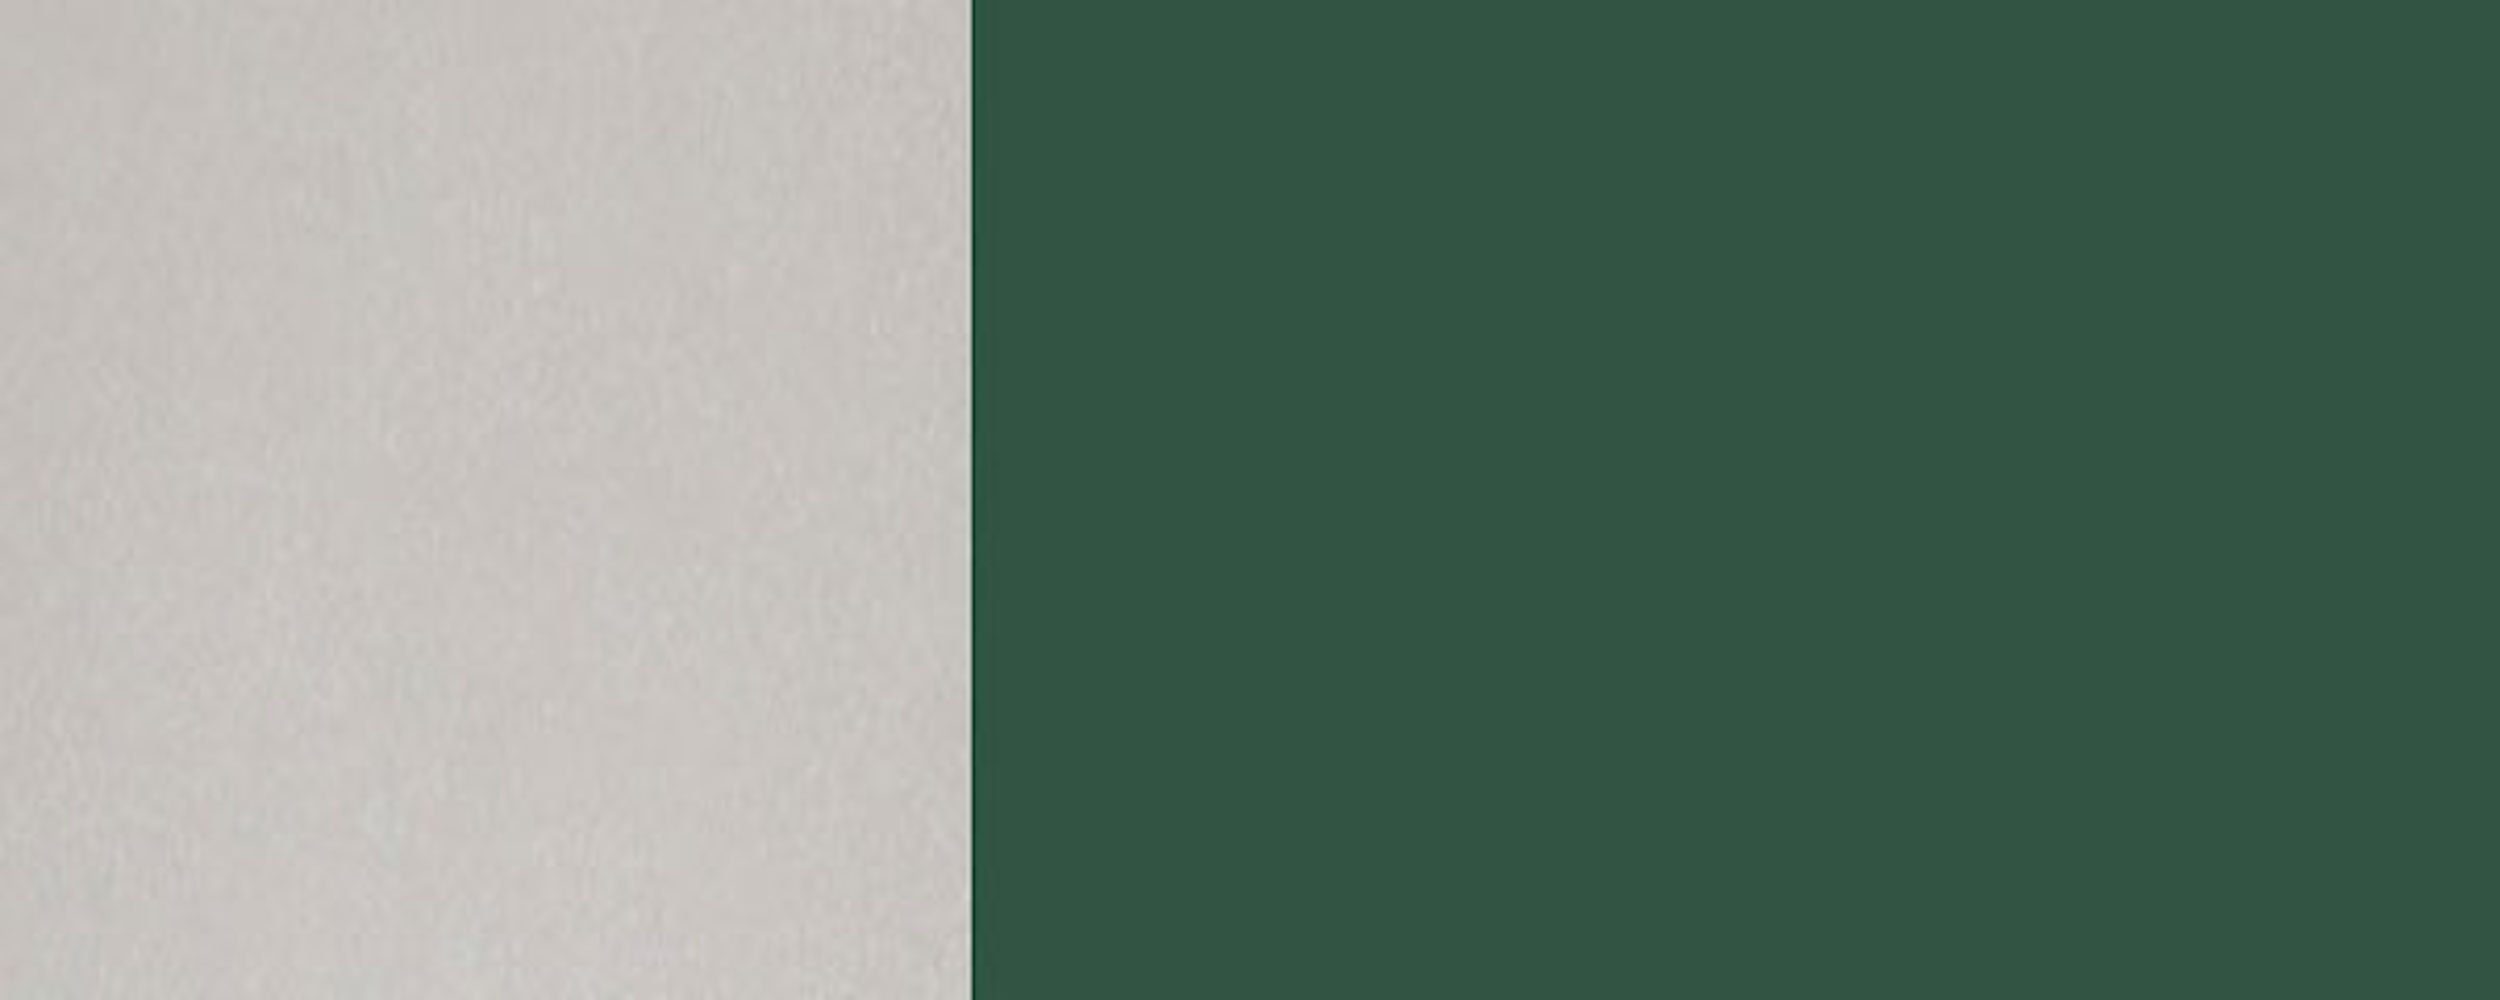 vollintegriert wählbar Front- RAL matt 6028 Sockelfarbe kieferngrün Feldmann-Wohnen Sockelblende 45cm und Tivoli,